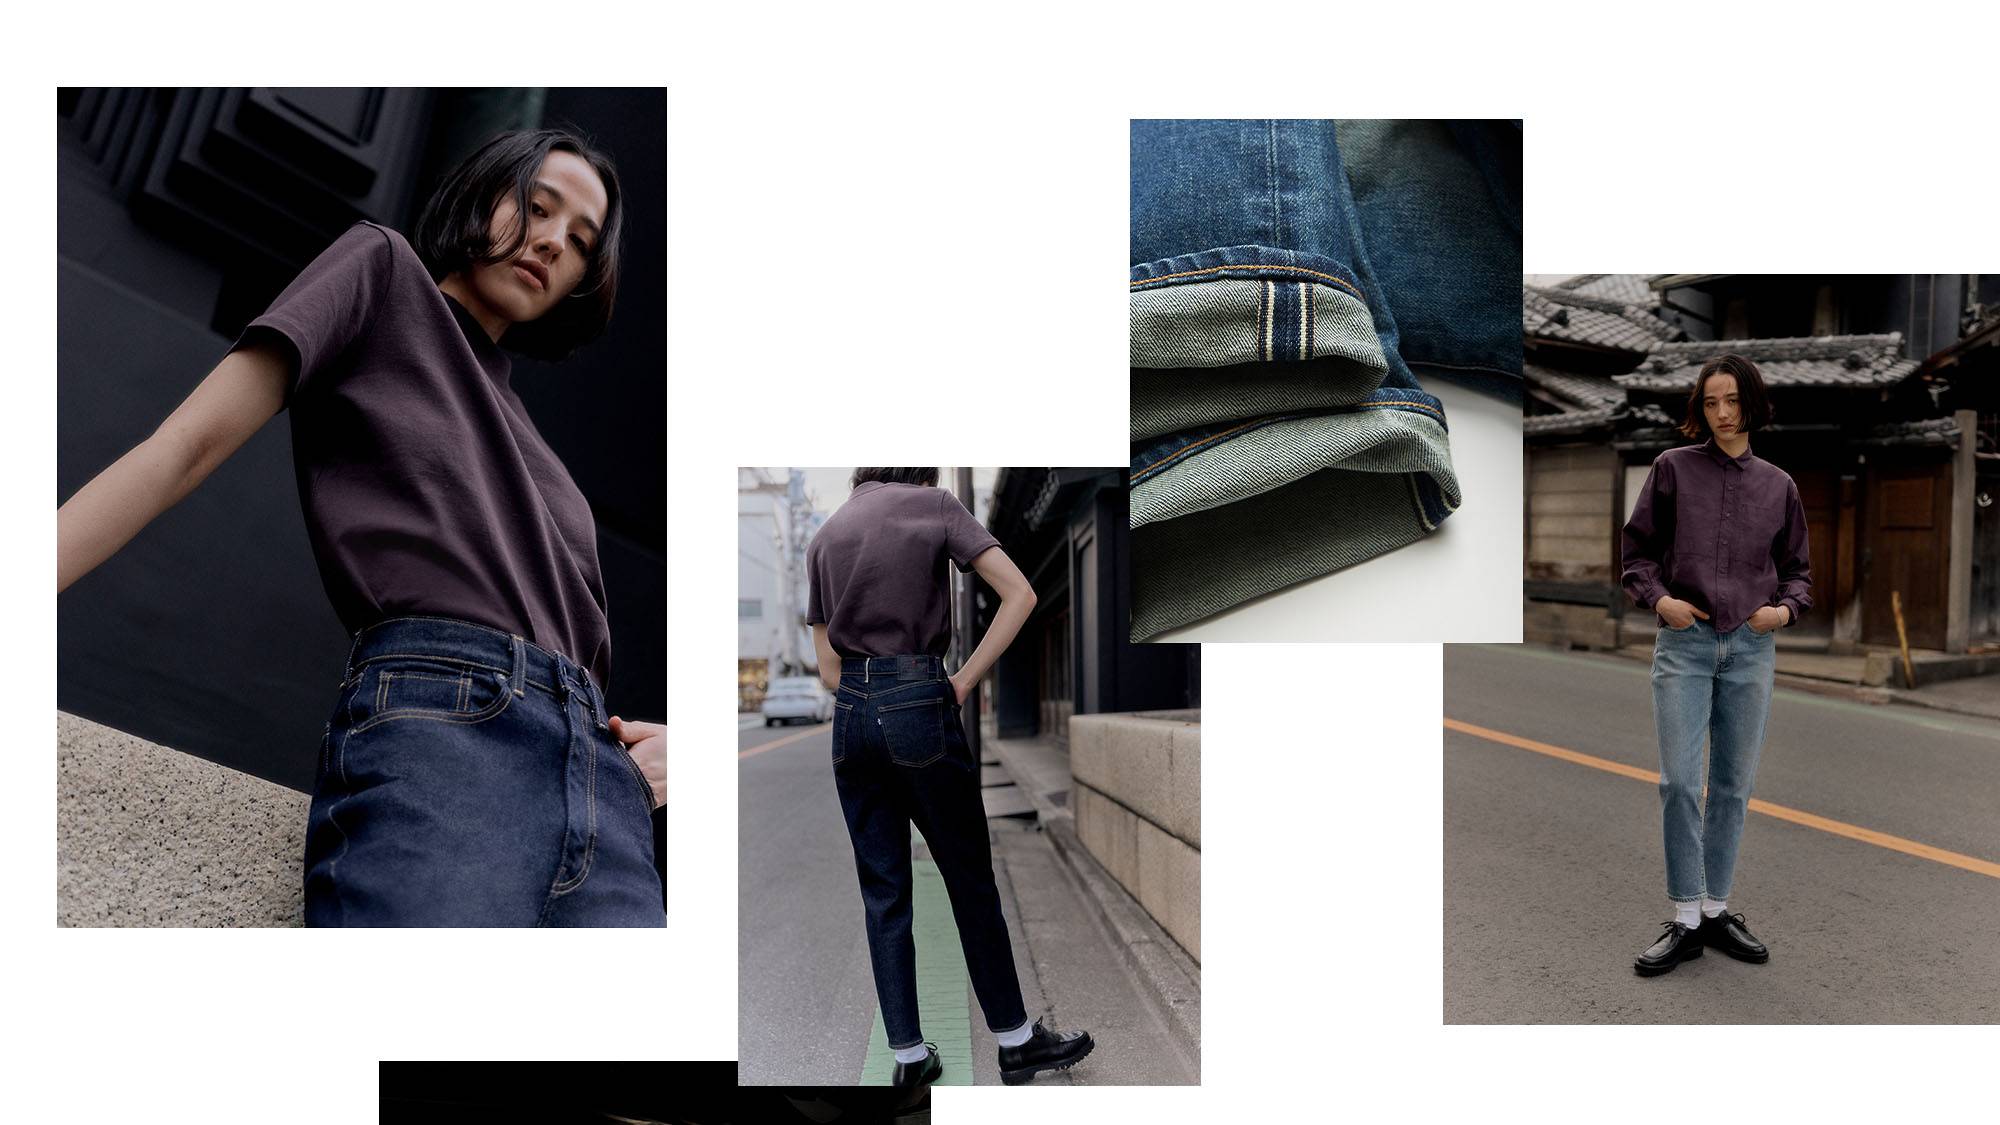 Levis® Made in Japan dark-wash selvedge denim styled on female model in dark grey purple t-shirt. She is also styled in a dark grey purple button up long sleeve shirt over lightwash selvedge jeans.